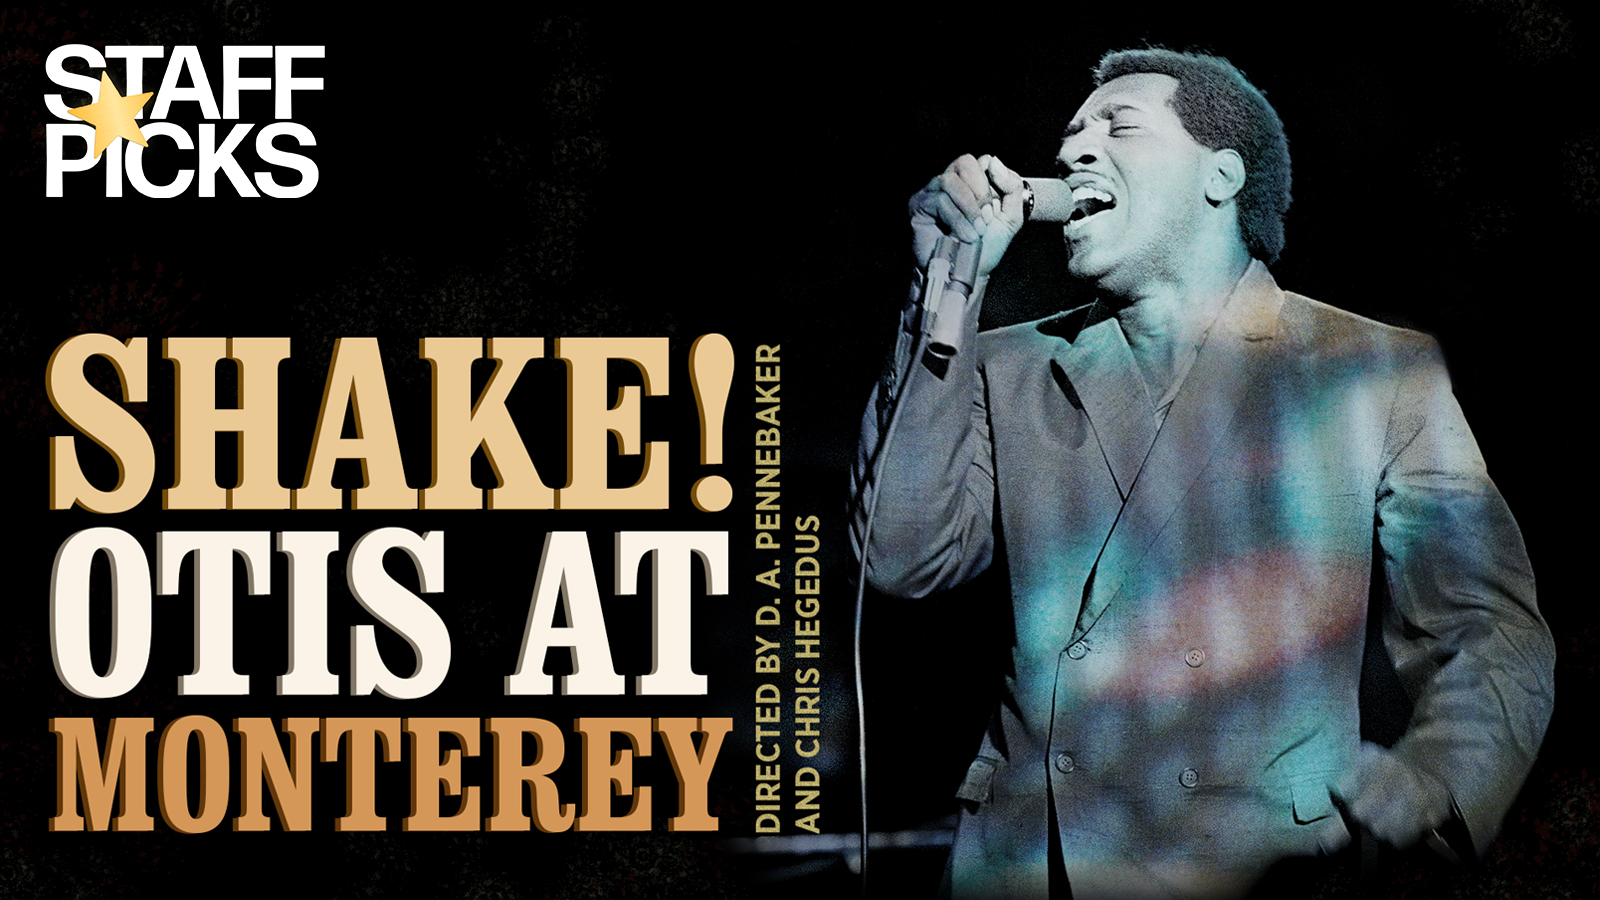 Shake! Otis at Monterey - The Criterion Channel